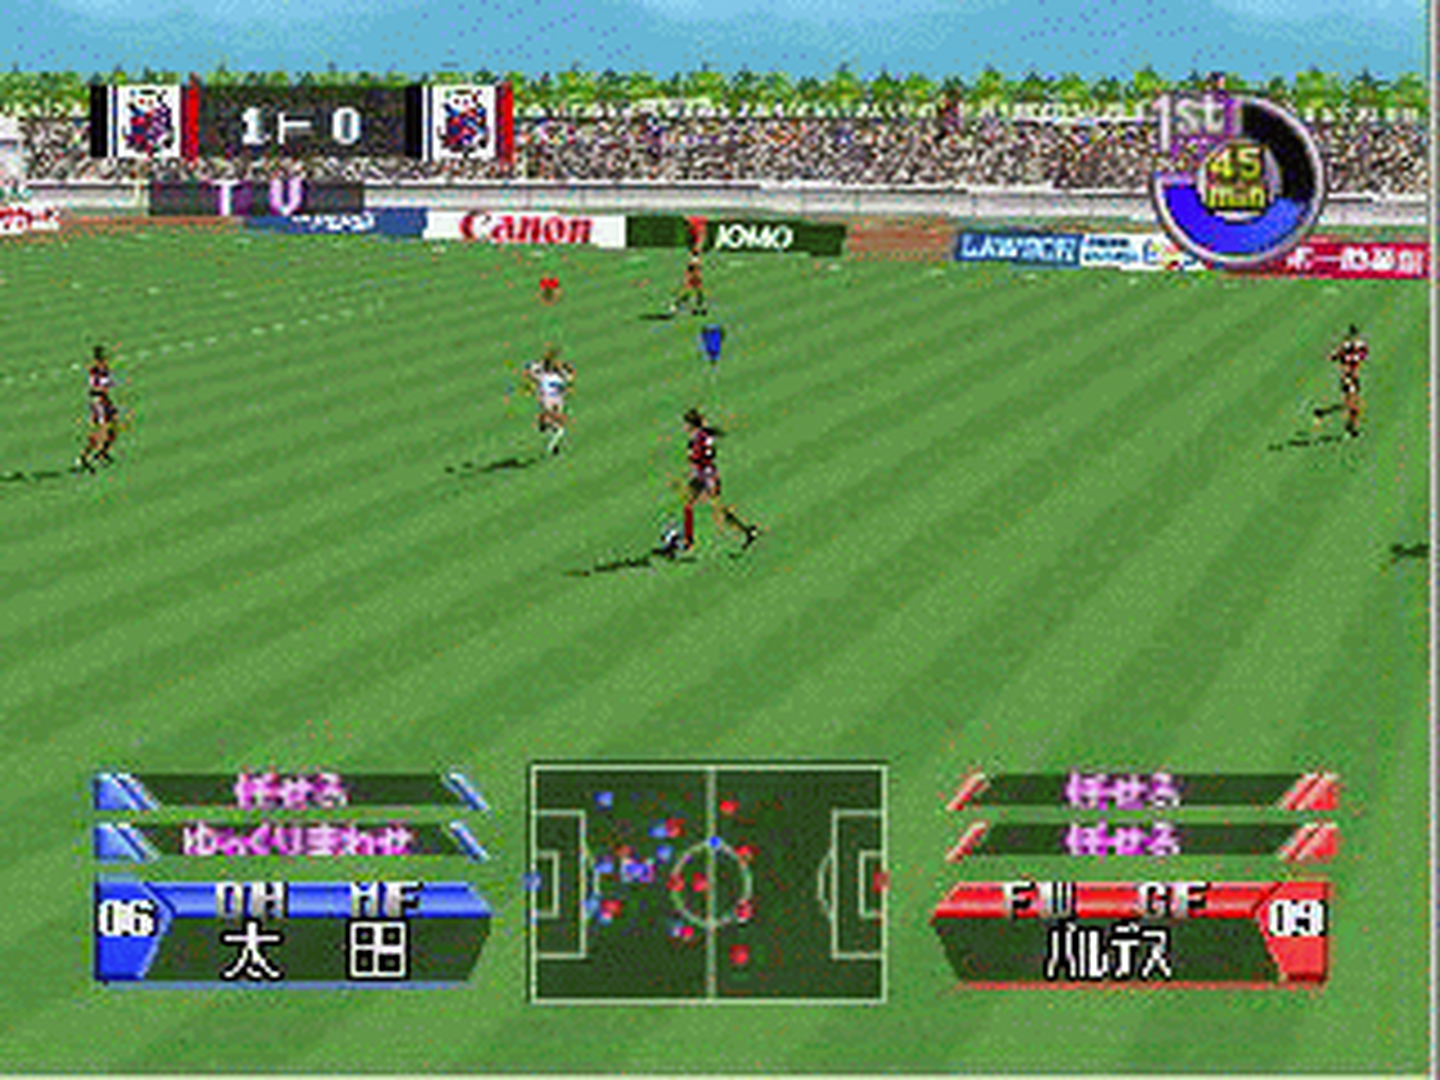 N64 GameBase J.League_Tactics_Soccer_(J)_(V1.1) ASCII_Entertainment 1999